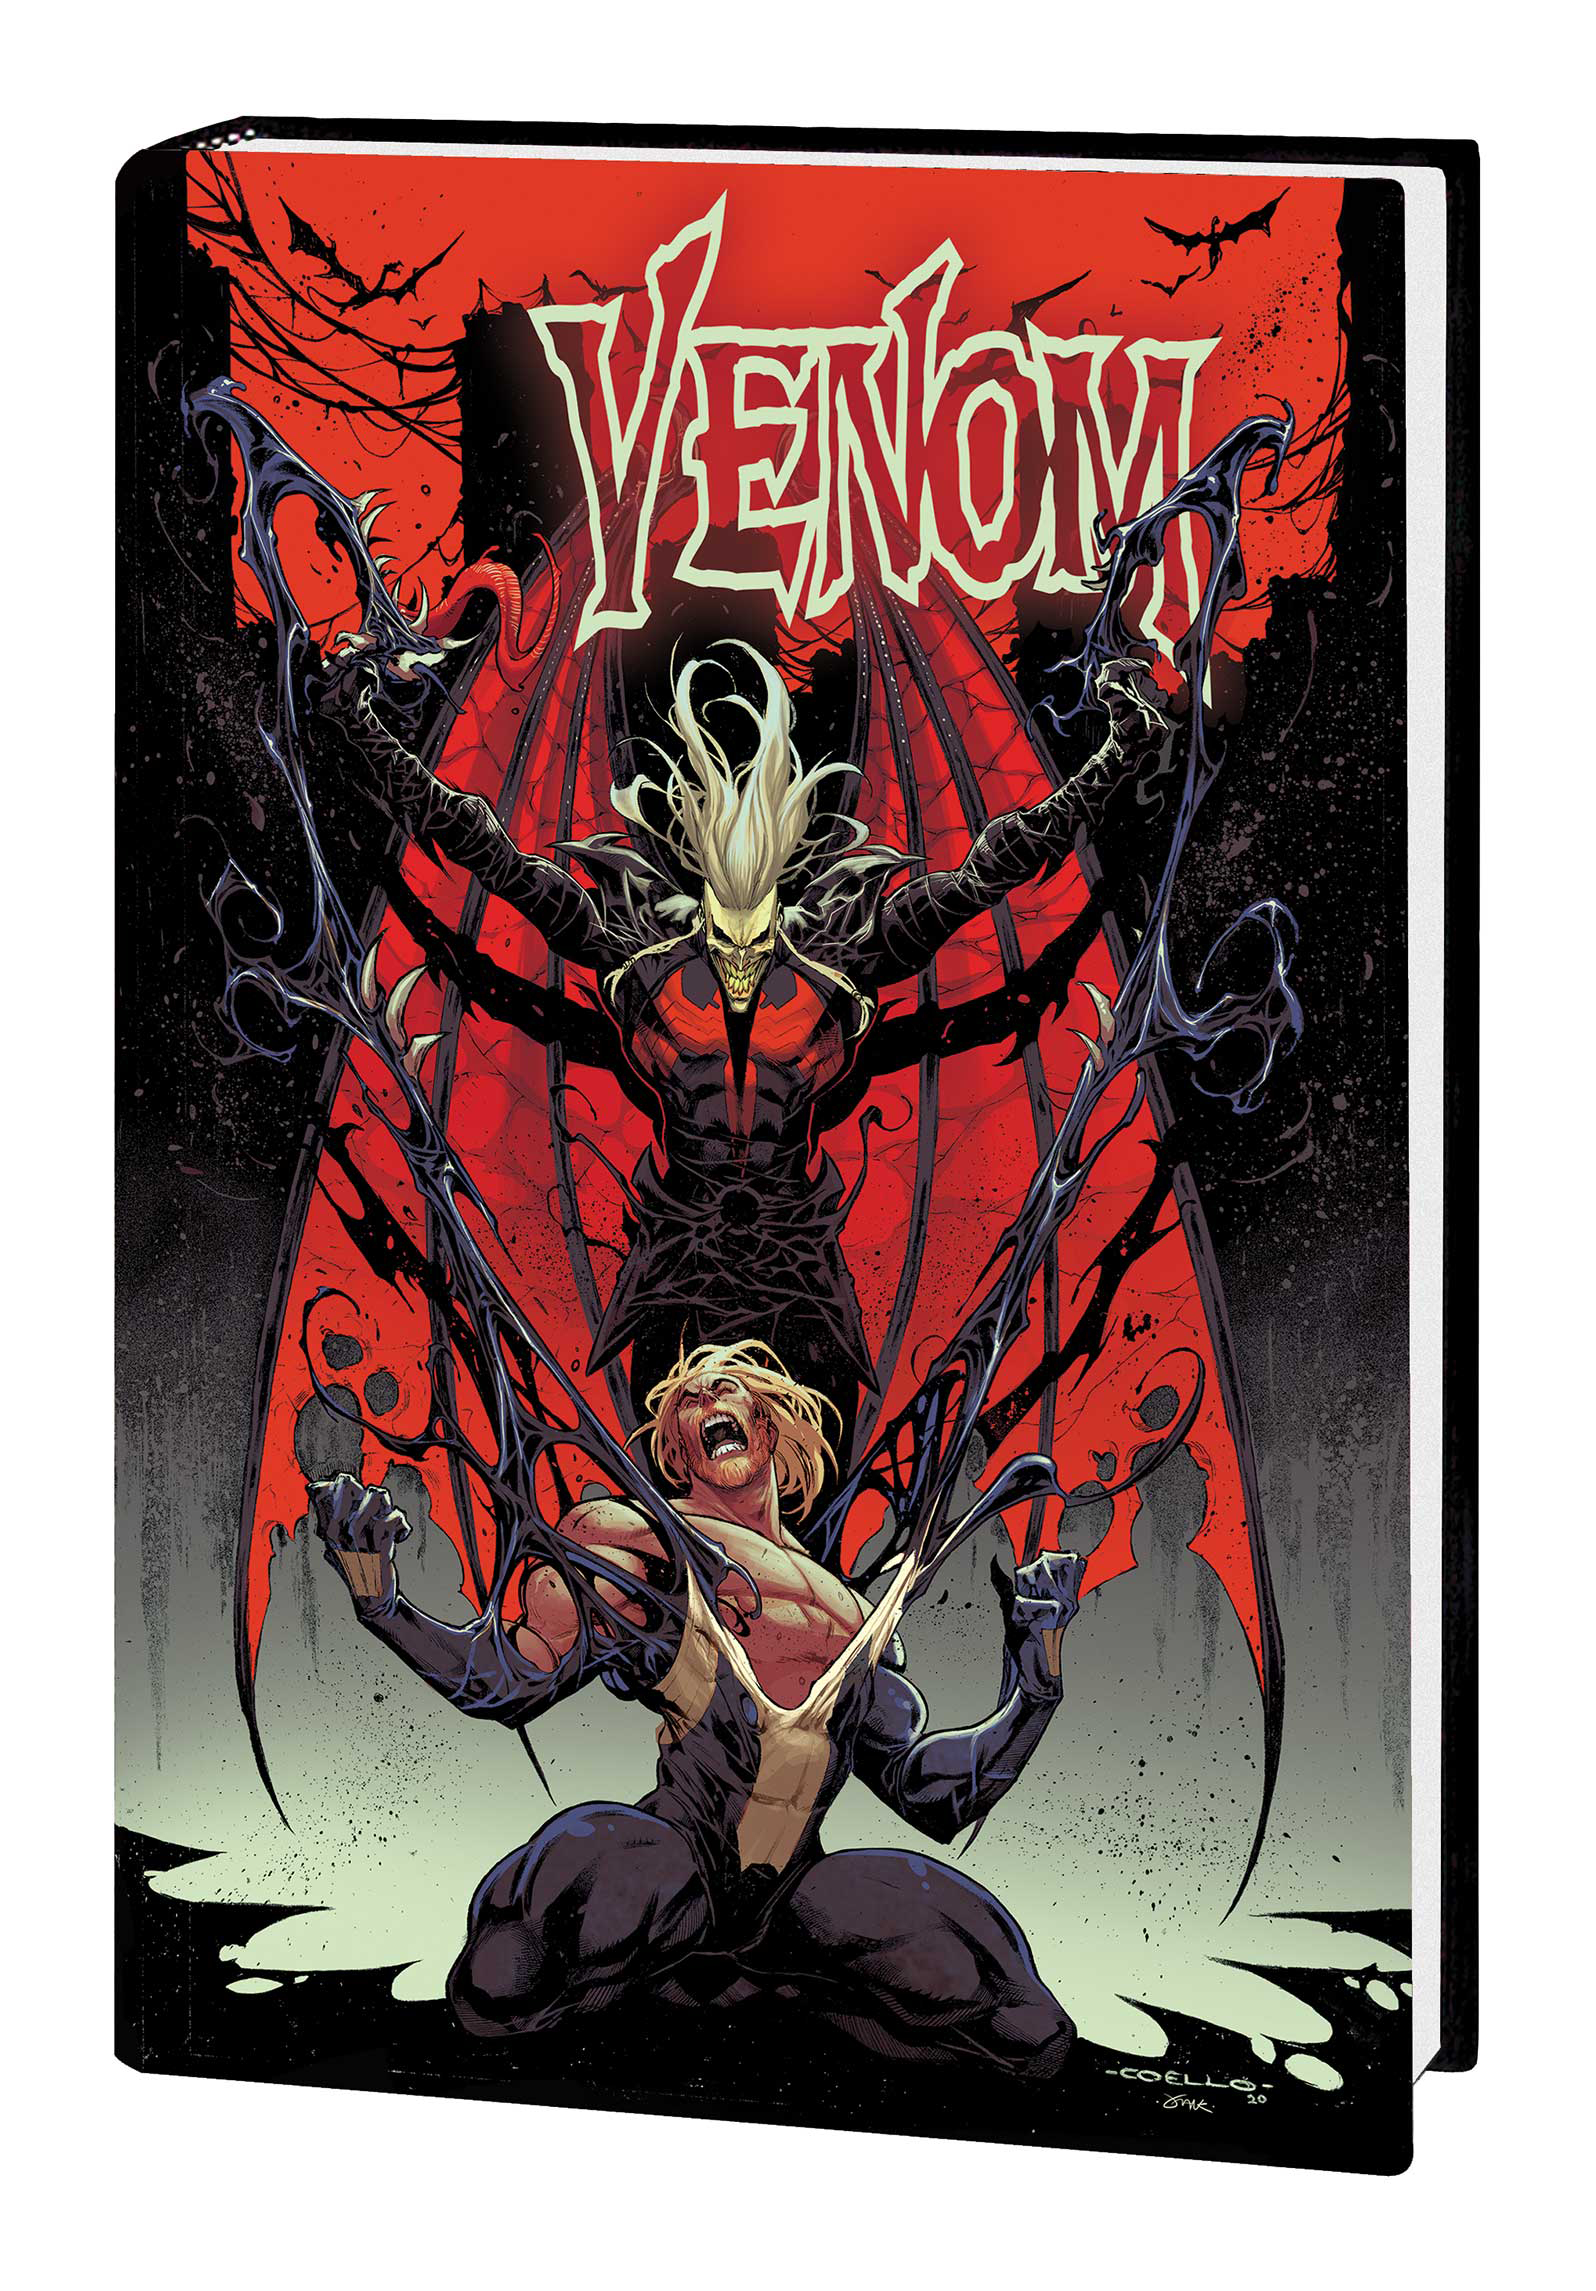 Venom by Donny Cates Hardcover Volume 3